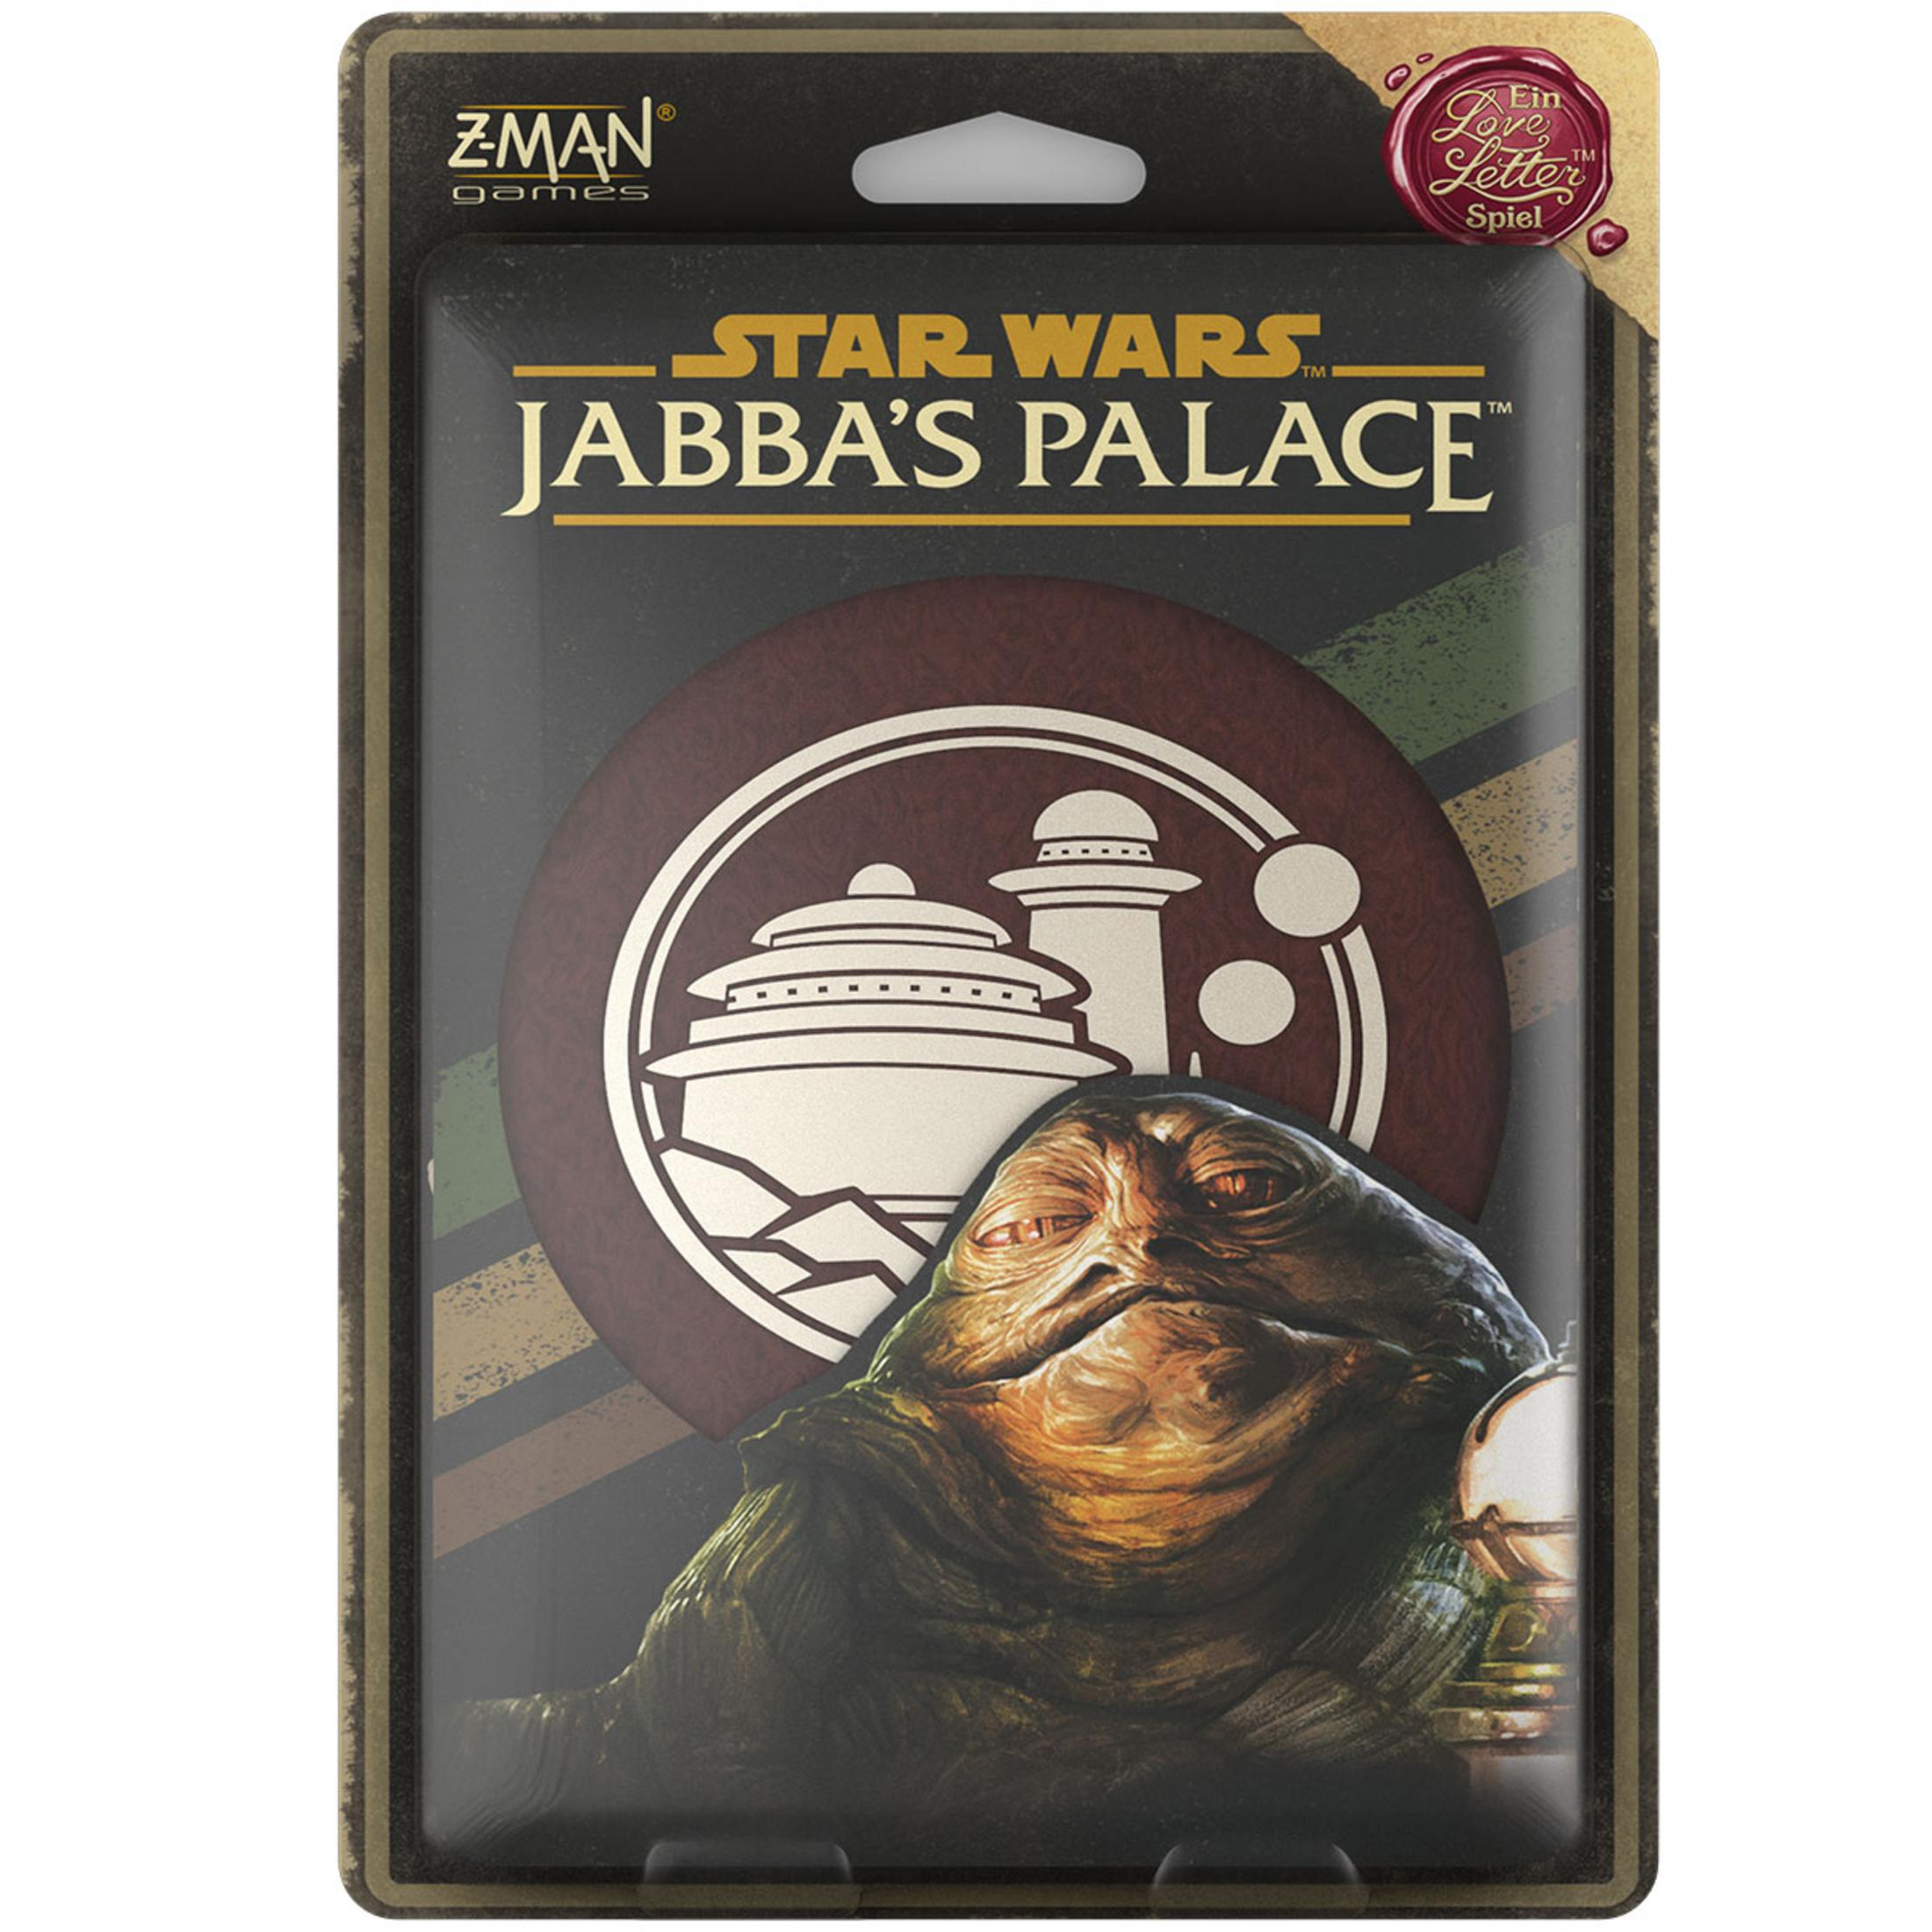 ZMND0022 PALACE S JABBA GAMES Z-MAN WARS: STAR Gesellschaftsspiel